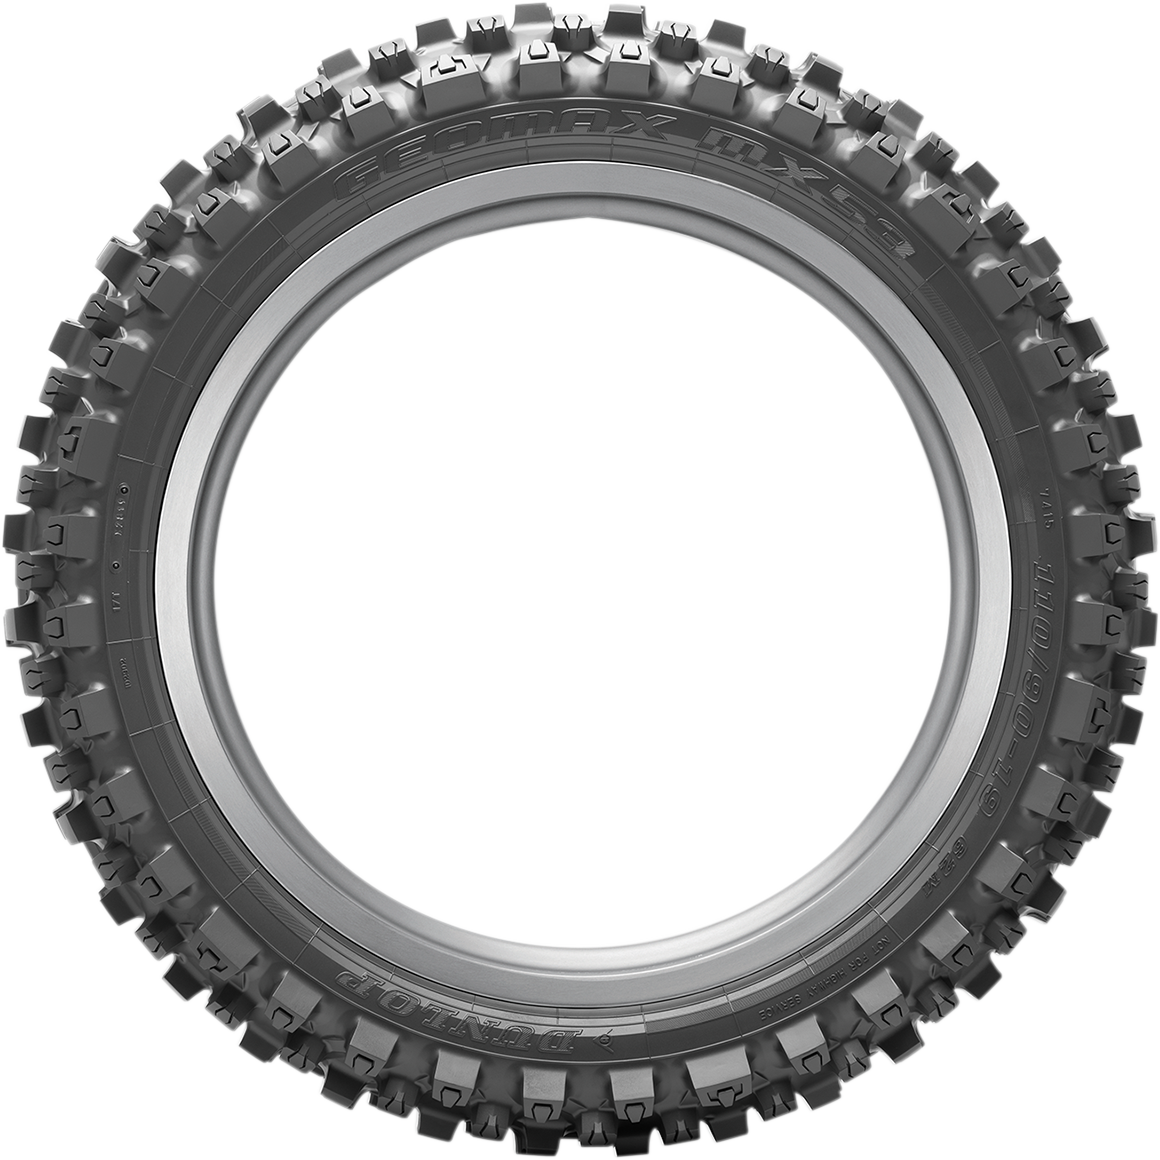 DUNLOP Tire - Geomax® MX53™ - Rear - 110/90-19 - 62M 45236424